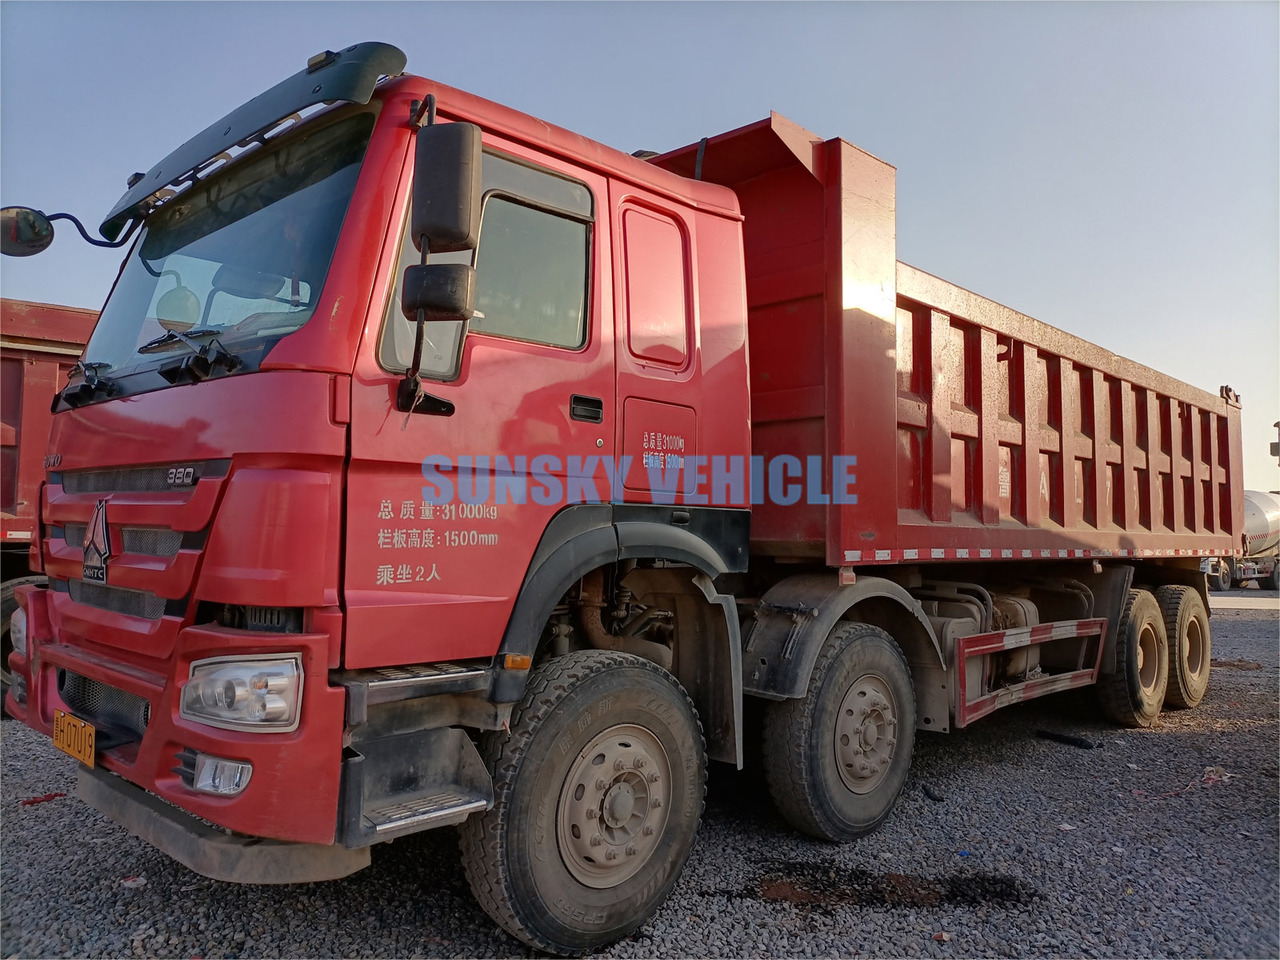 Tovornjak prekucnik za transport razsutega materiala HOWO 8x4 NX430 Dump Truck: slika 10